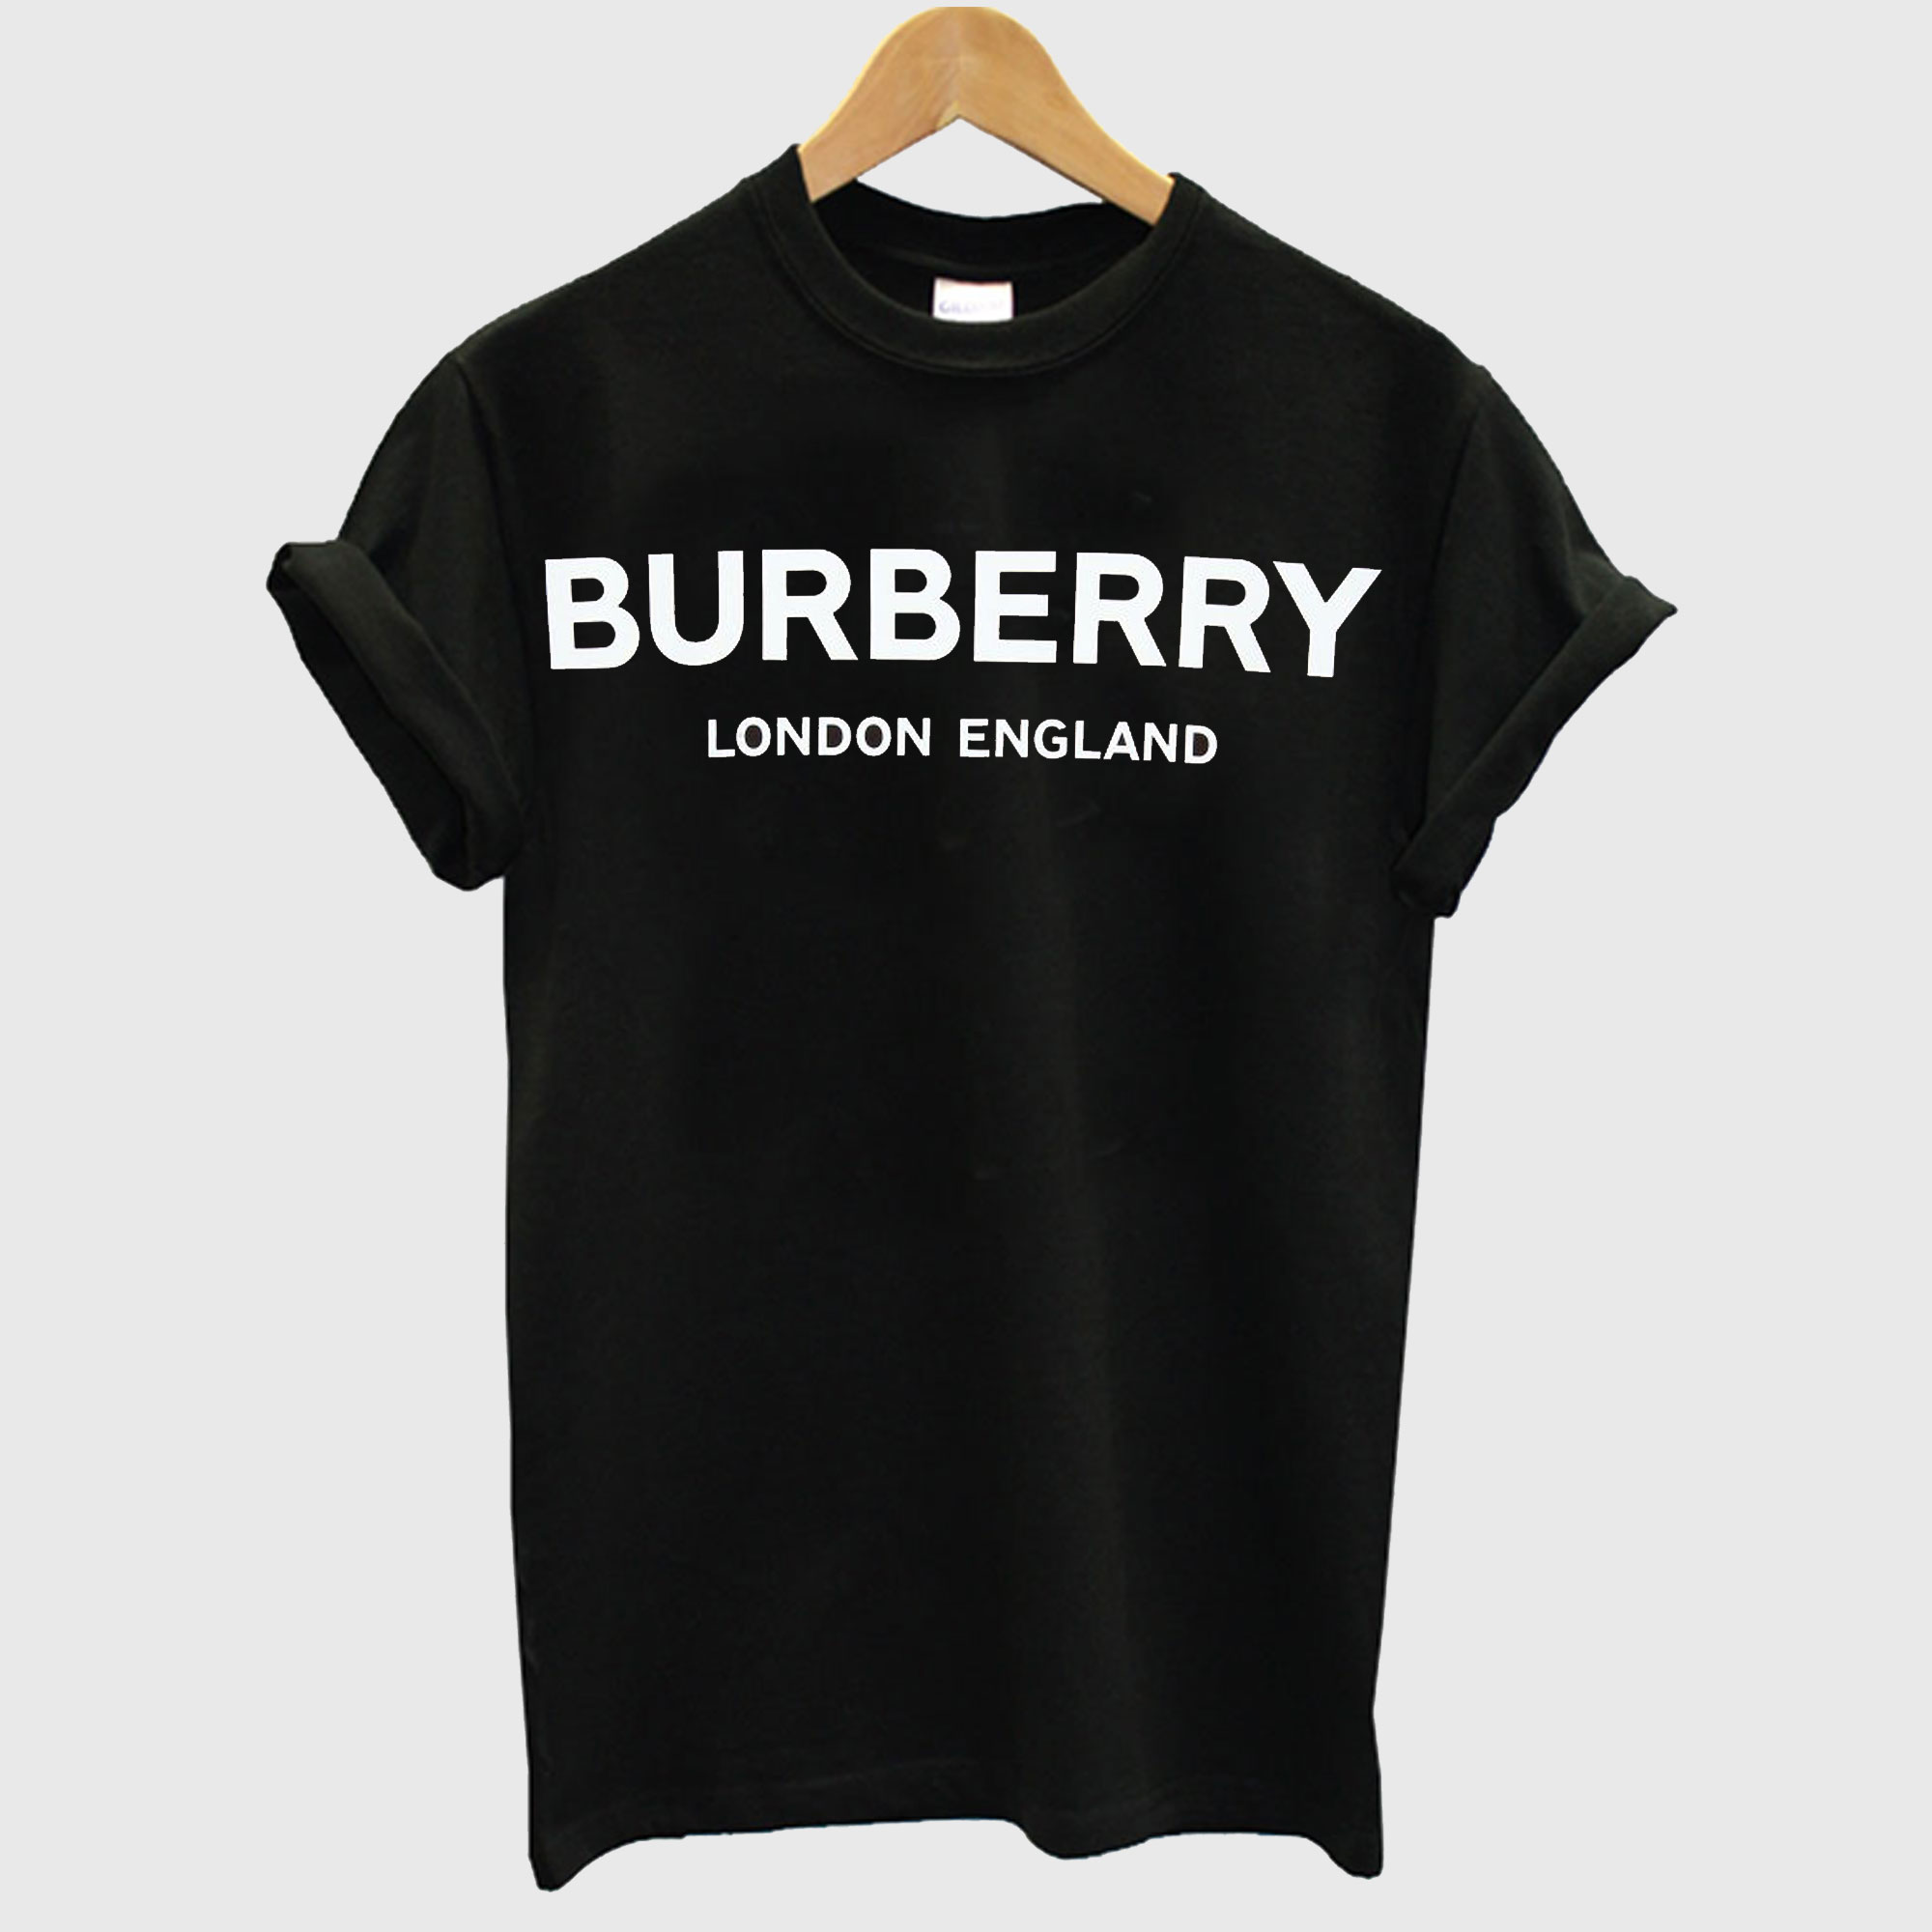 burberry london england